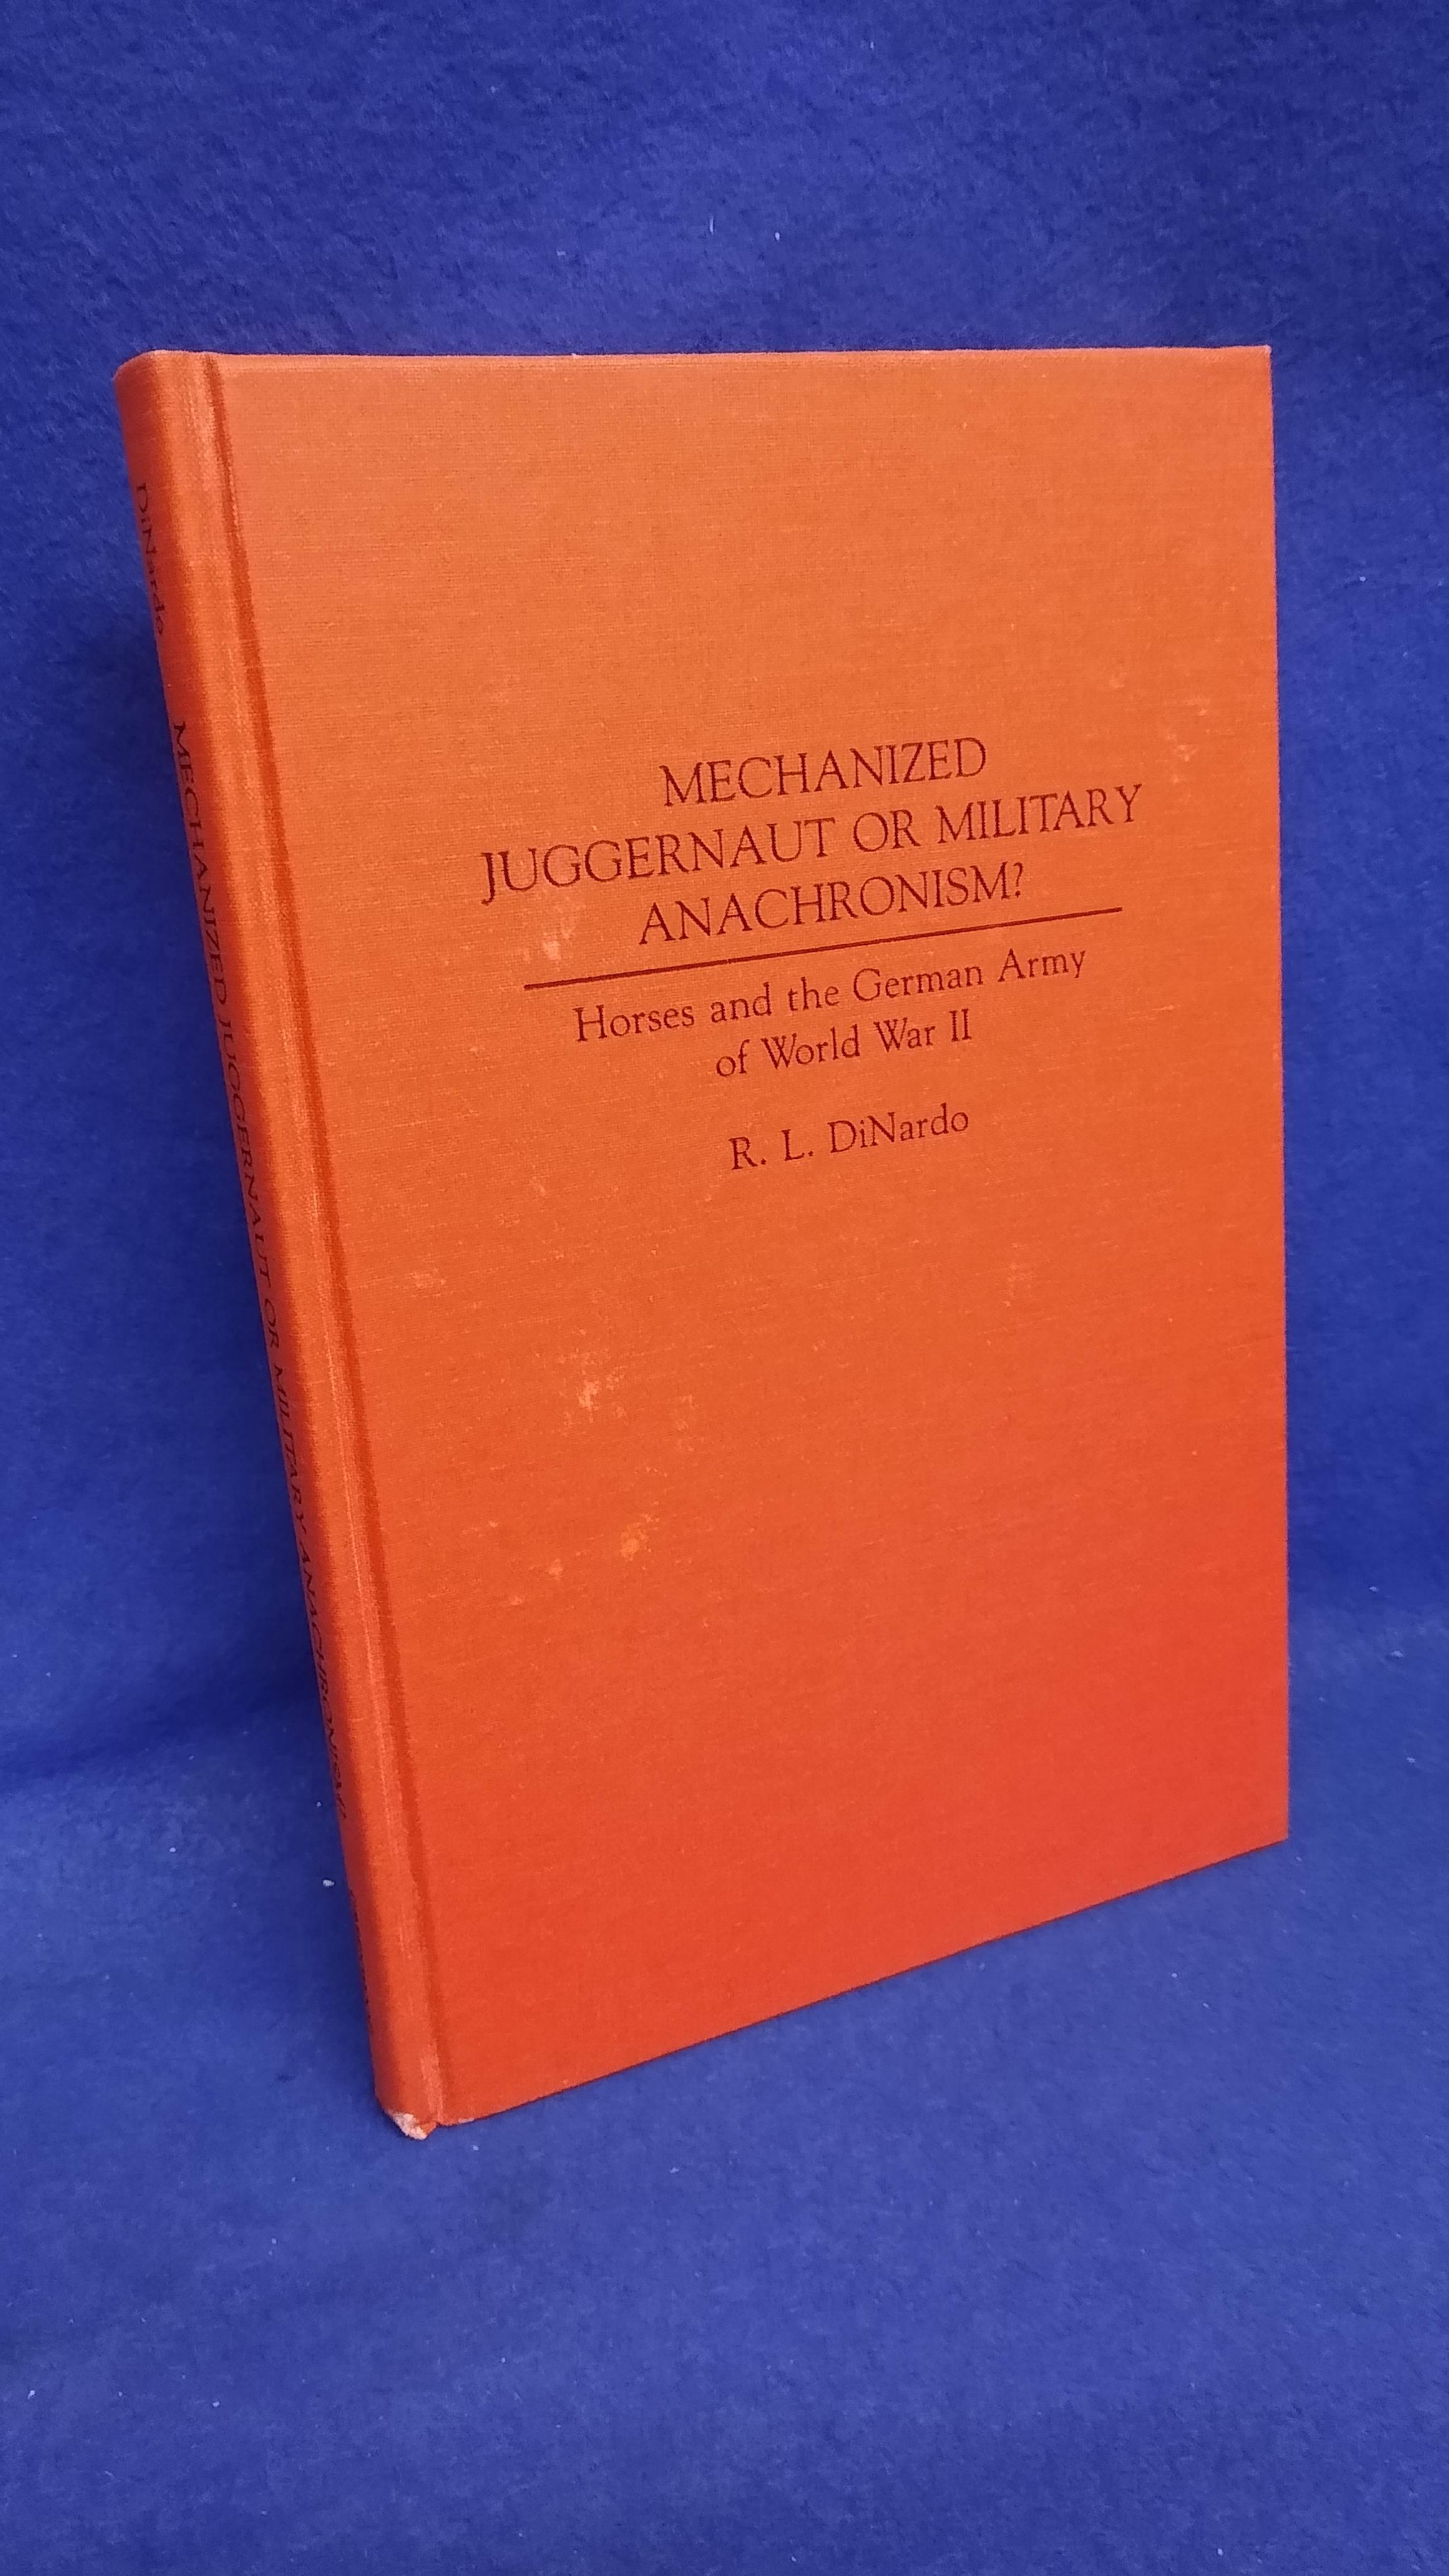 Mechanized Juggernaut or Military Anachronism: Horses and the German Army of World War II.